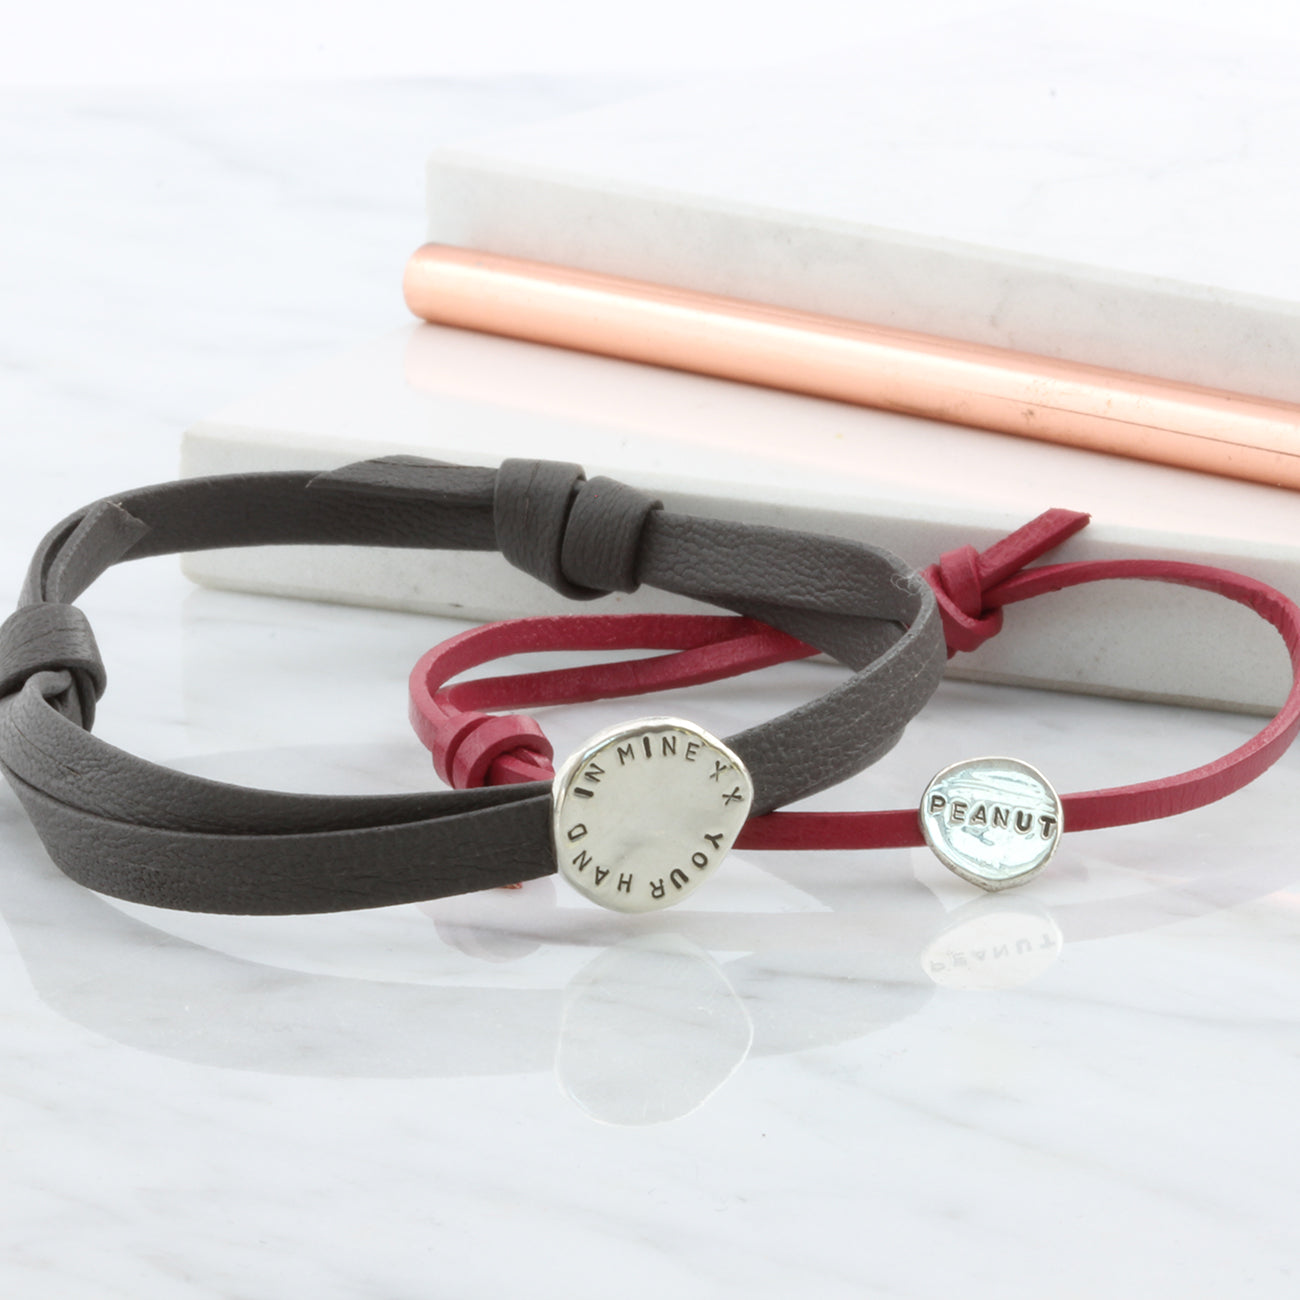 Matching Personalised 'Daddy & Me' Nappa Leather Bracelets - Soremi Jewellery